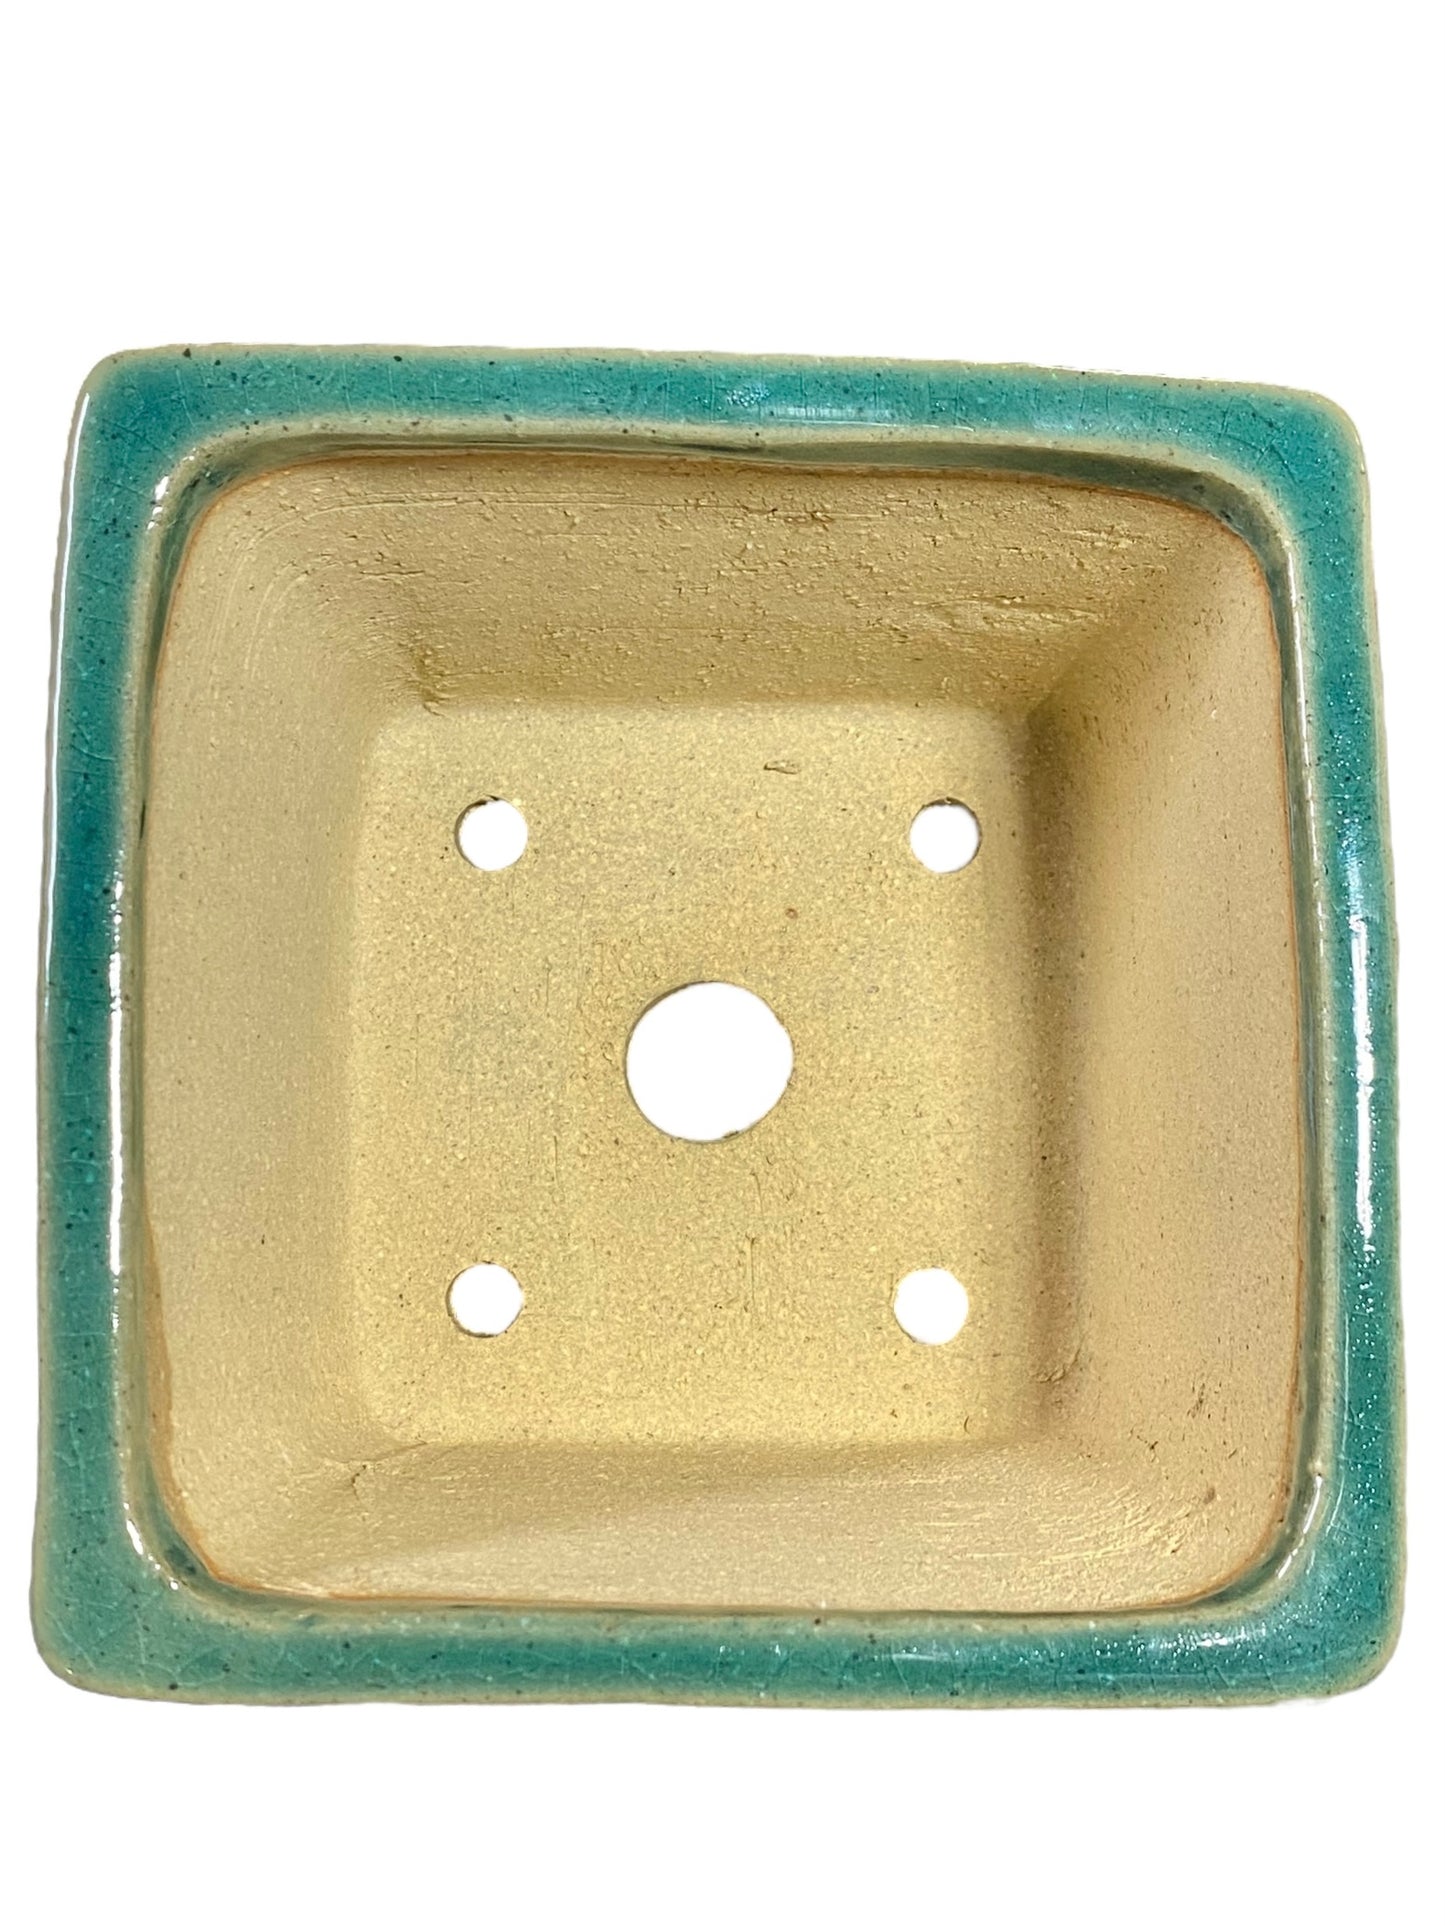 Shibakatsu - Exhibition Quality Crackle Glazed Bonsai Pot (5-1/4” wide)